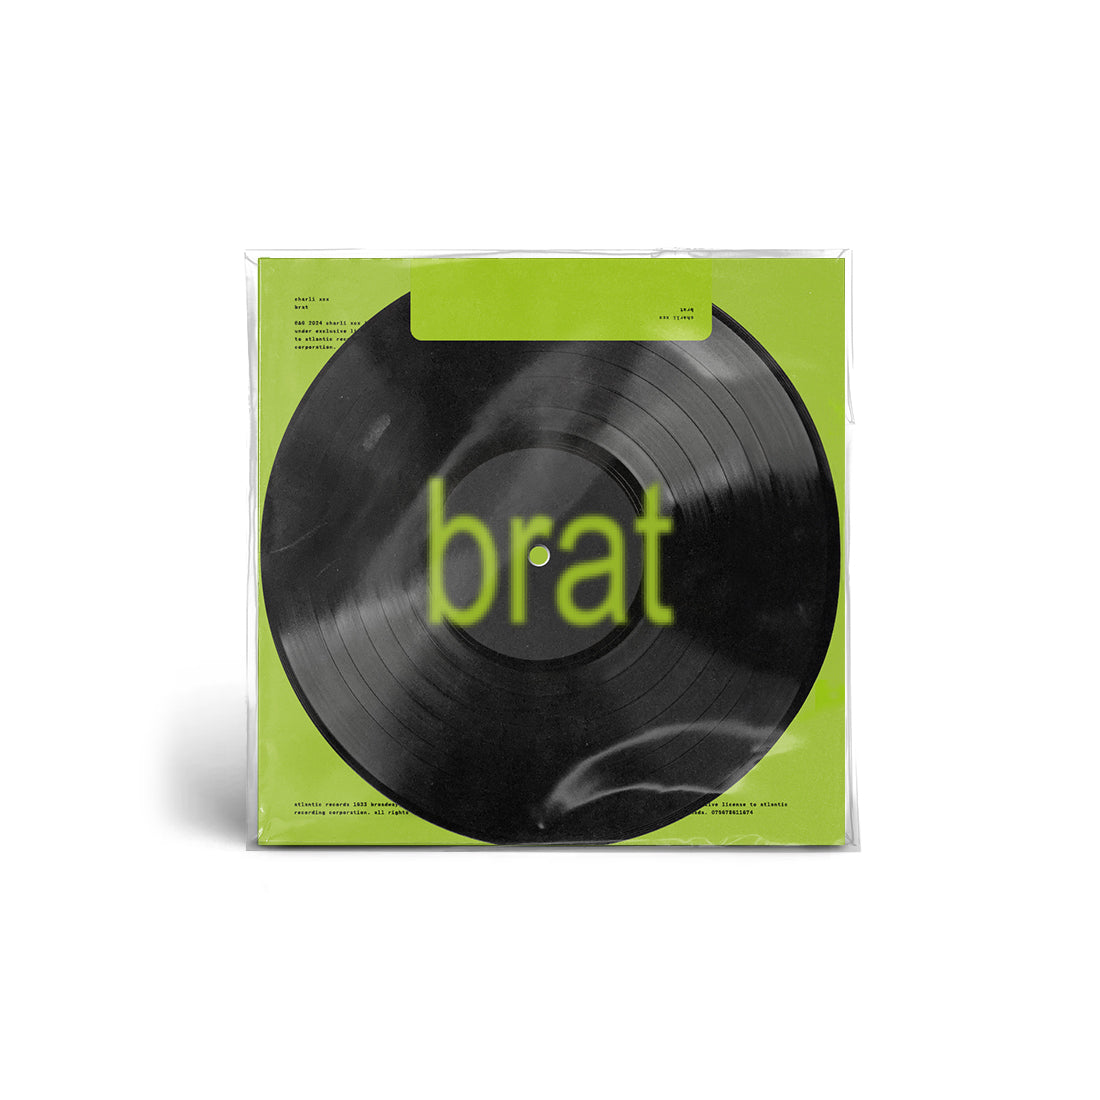 BRAT (includes the Club classics / B2b 7” vinyl)